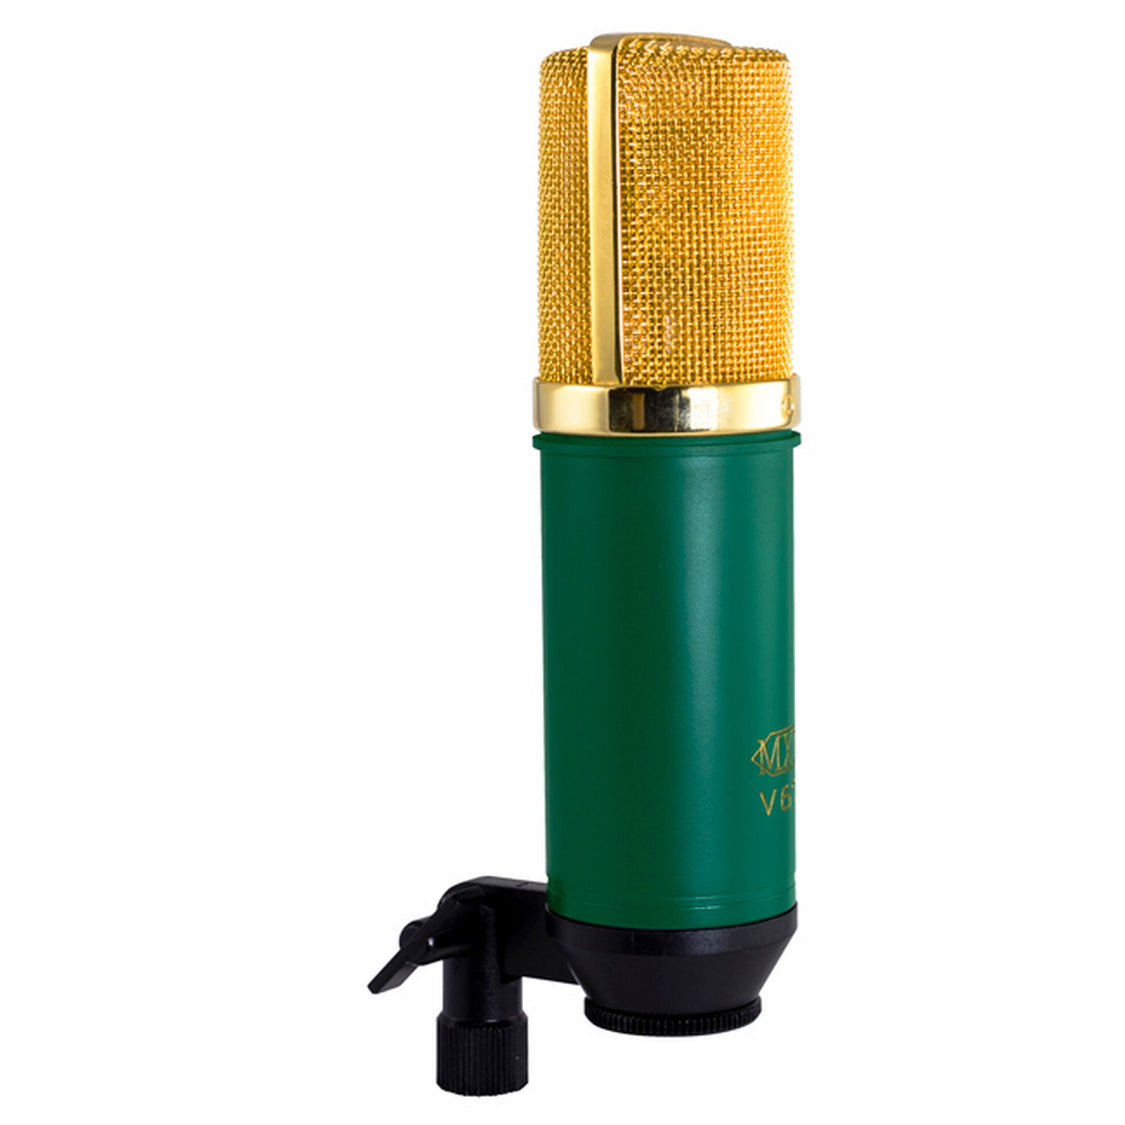 MXL V67G Large Capsule Condenser Microphone (Used)